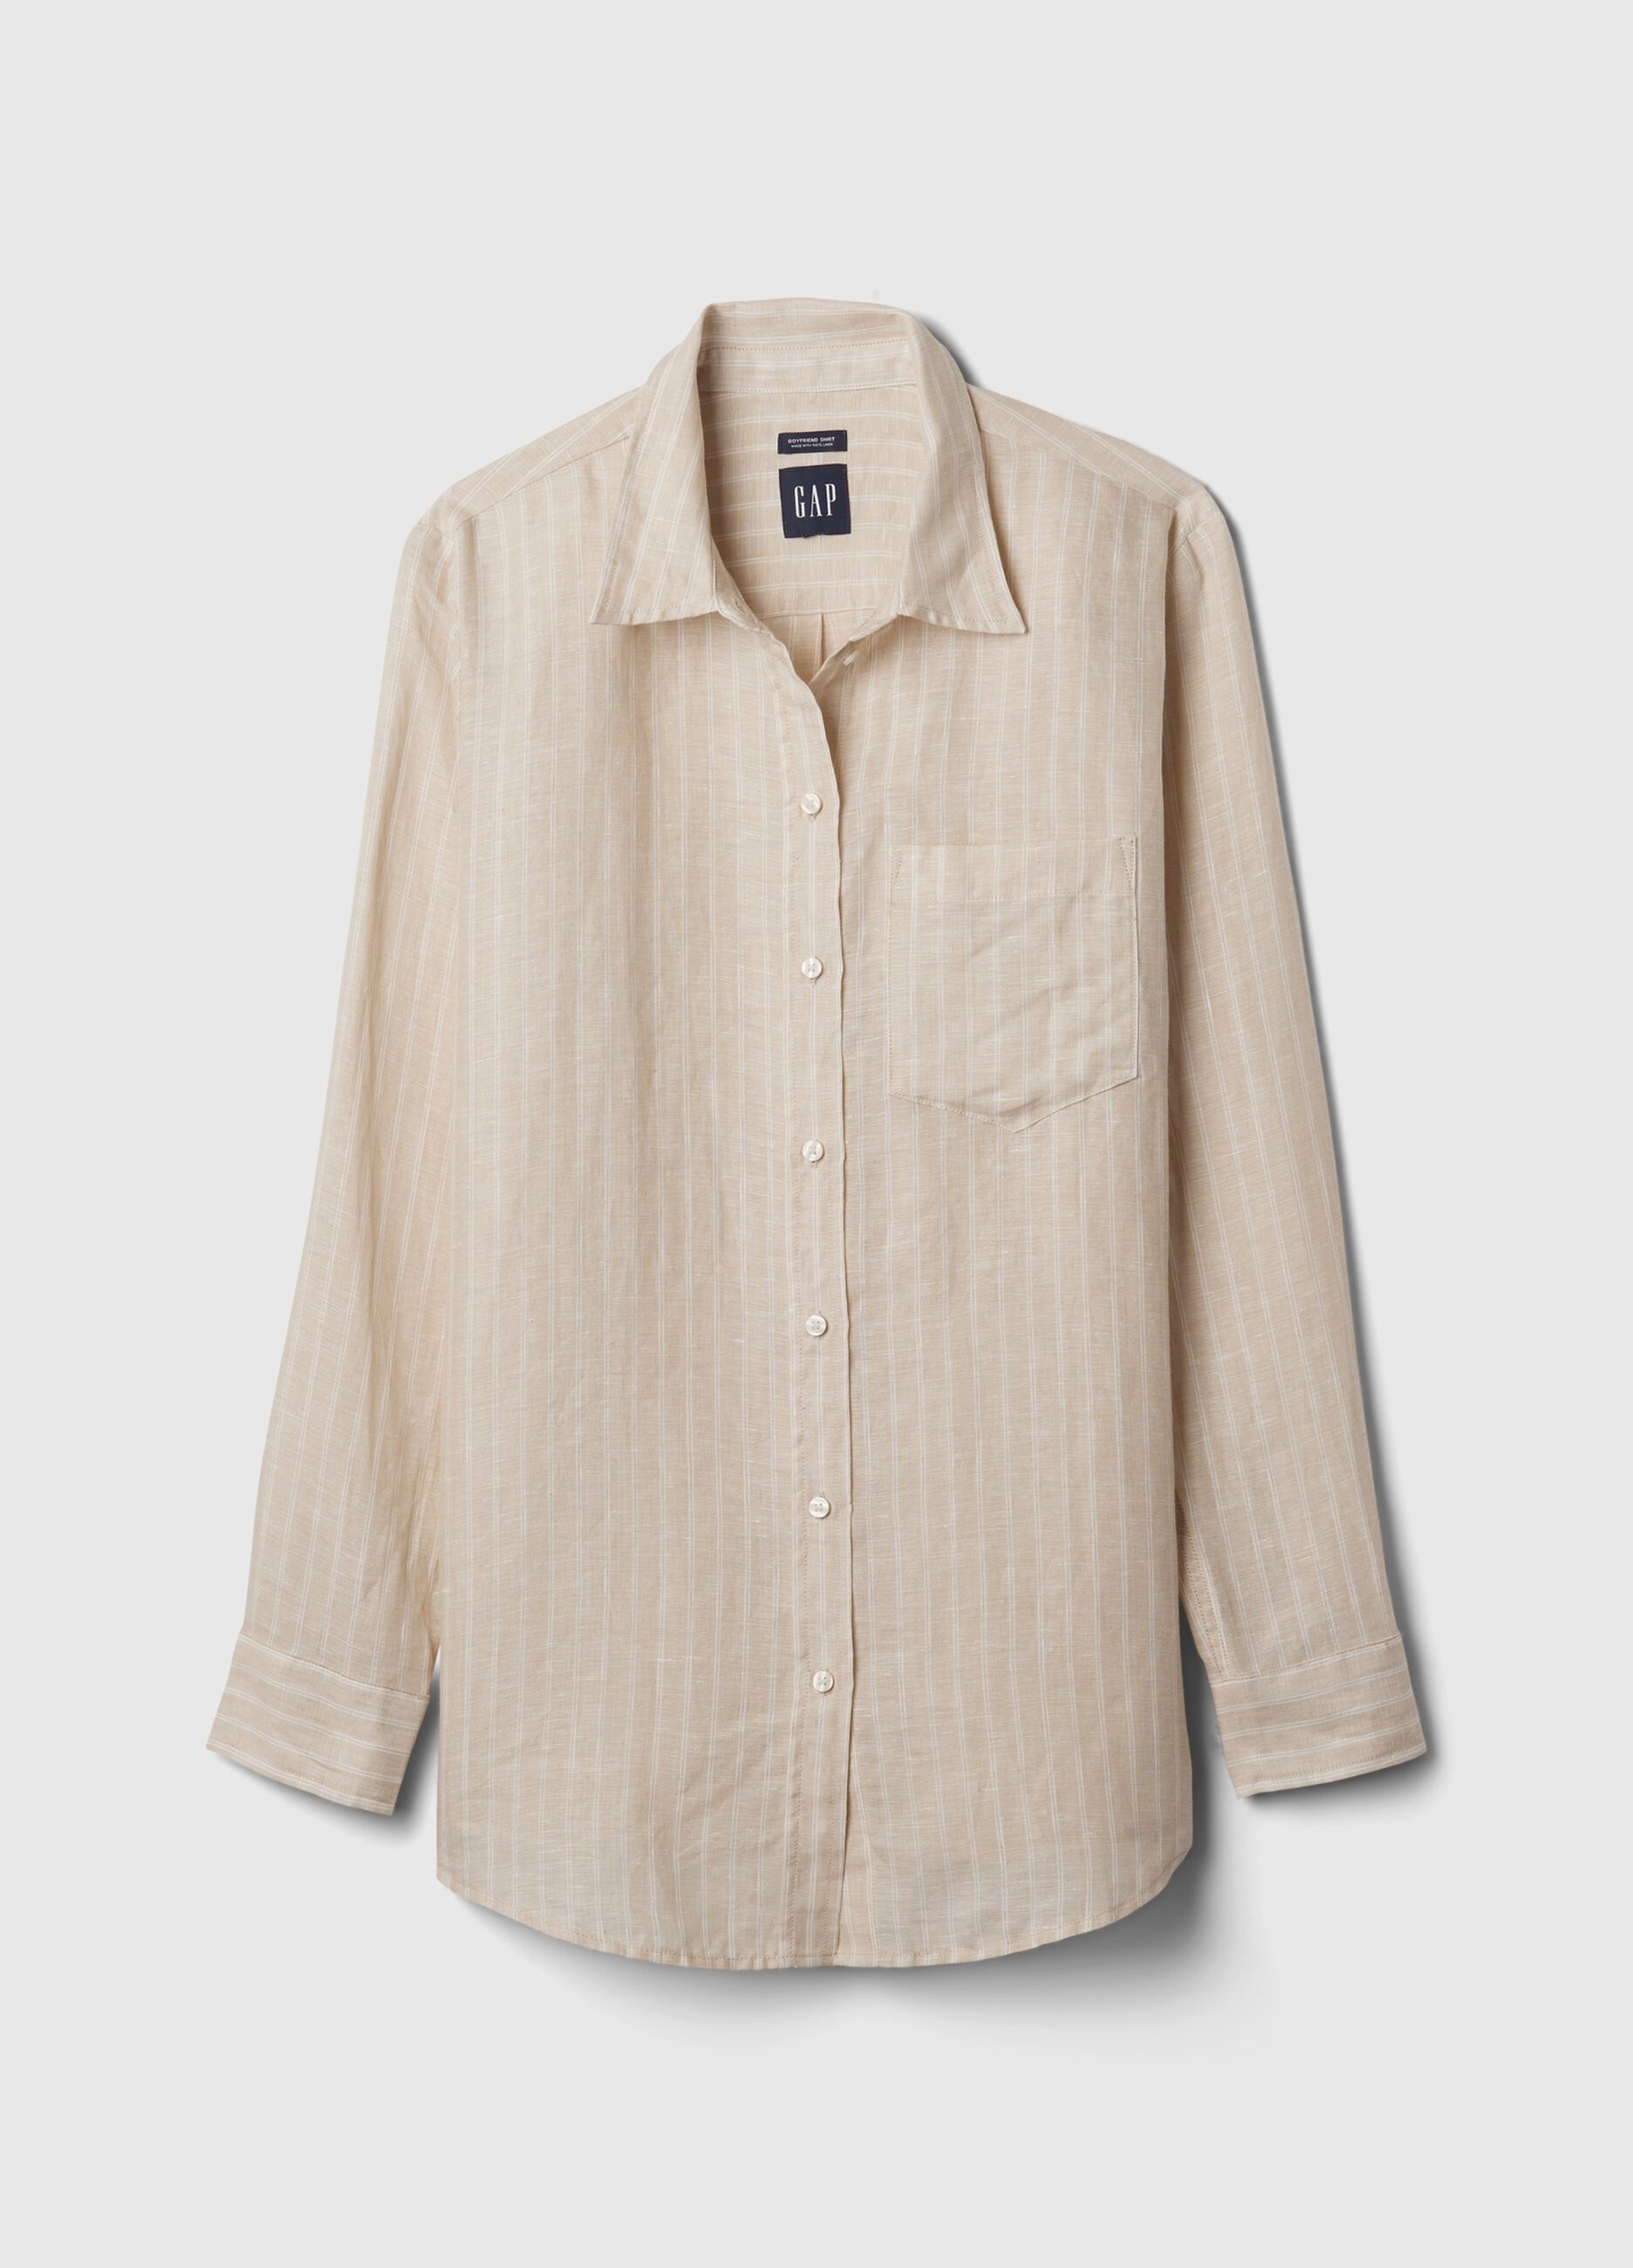 Boyfriend-fit shirt in linen with pocket